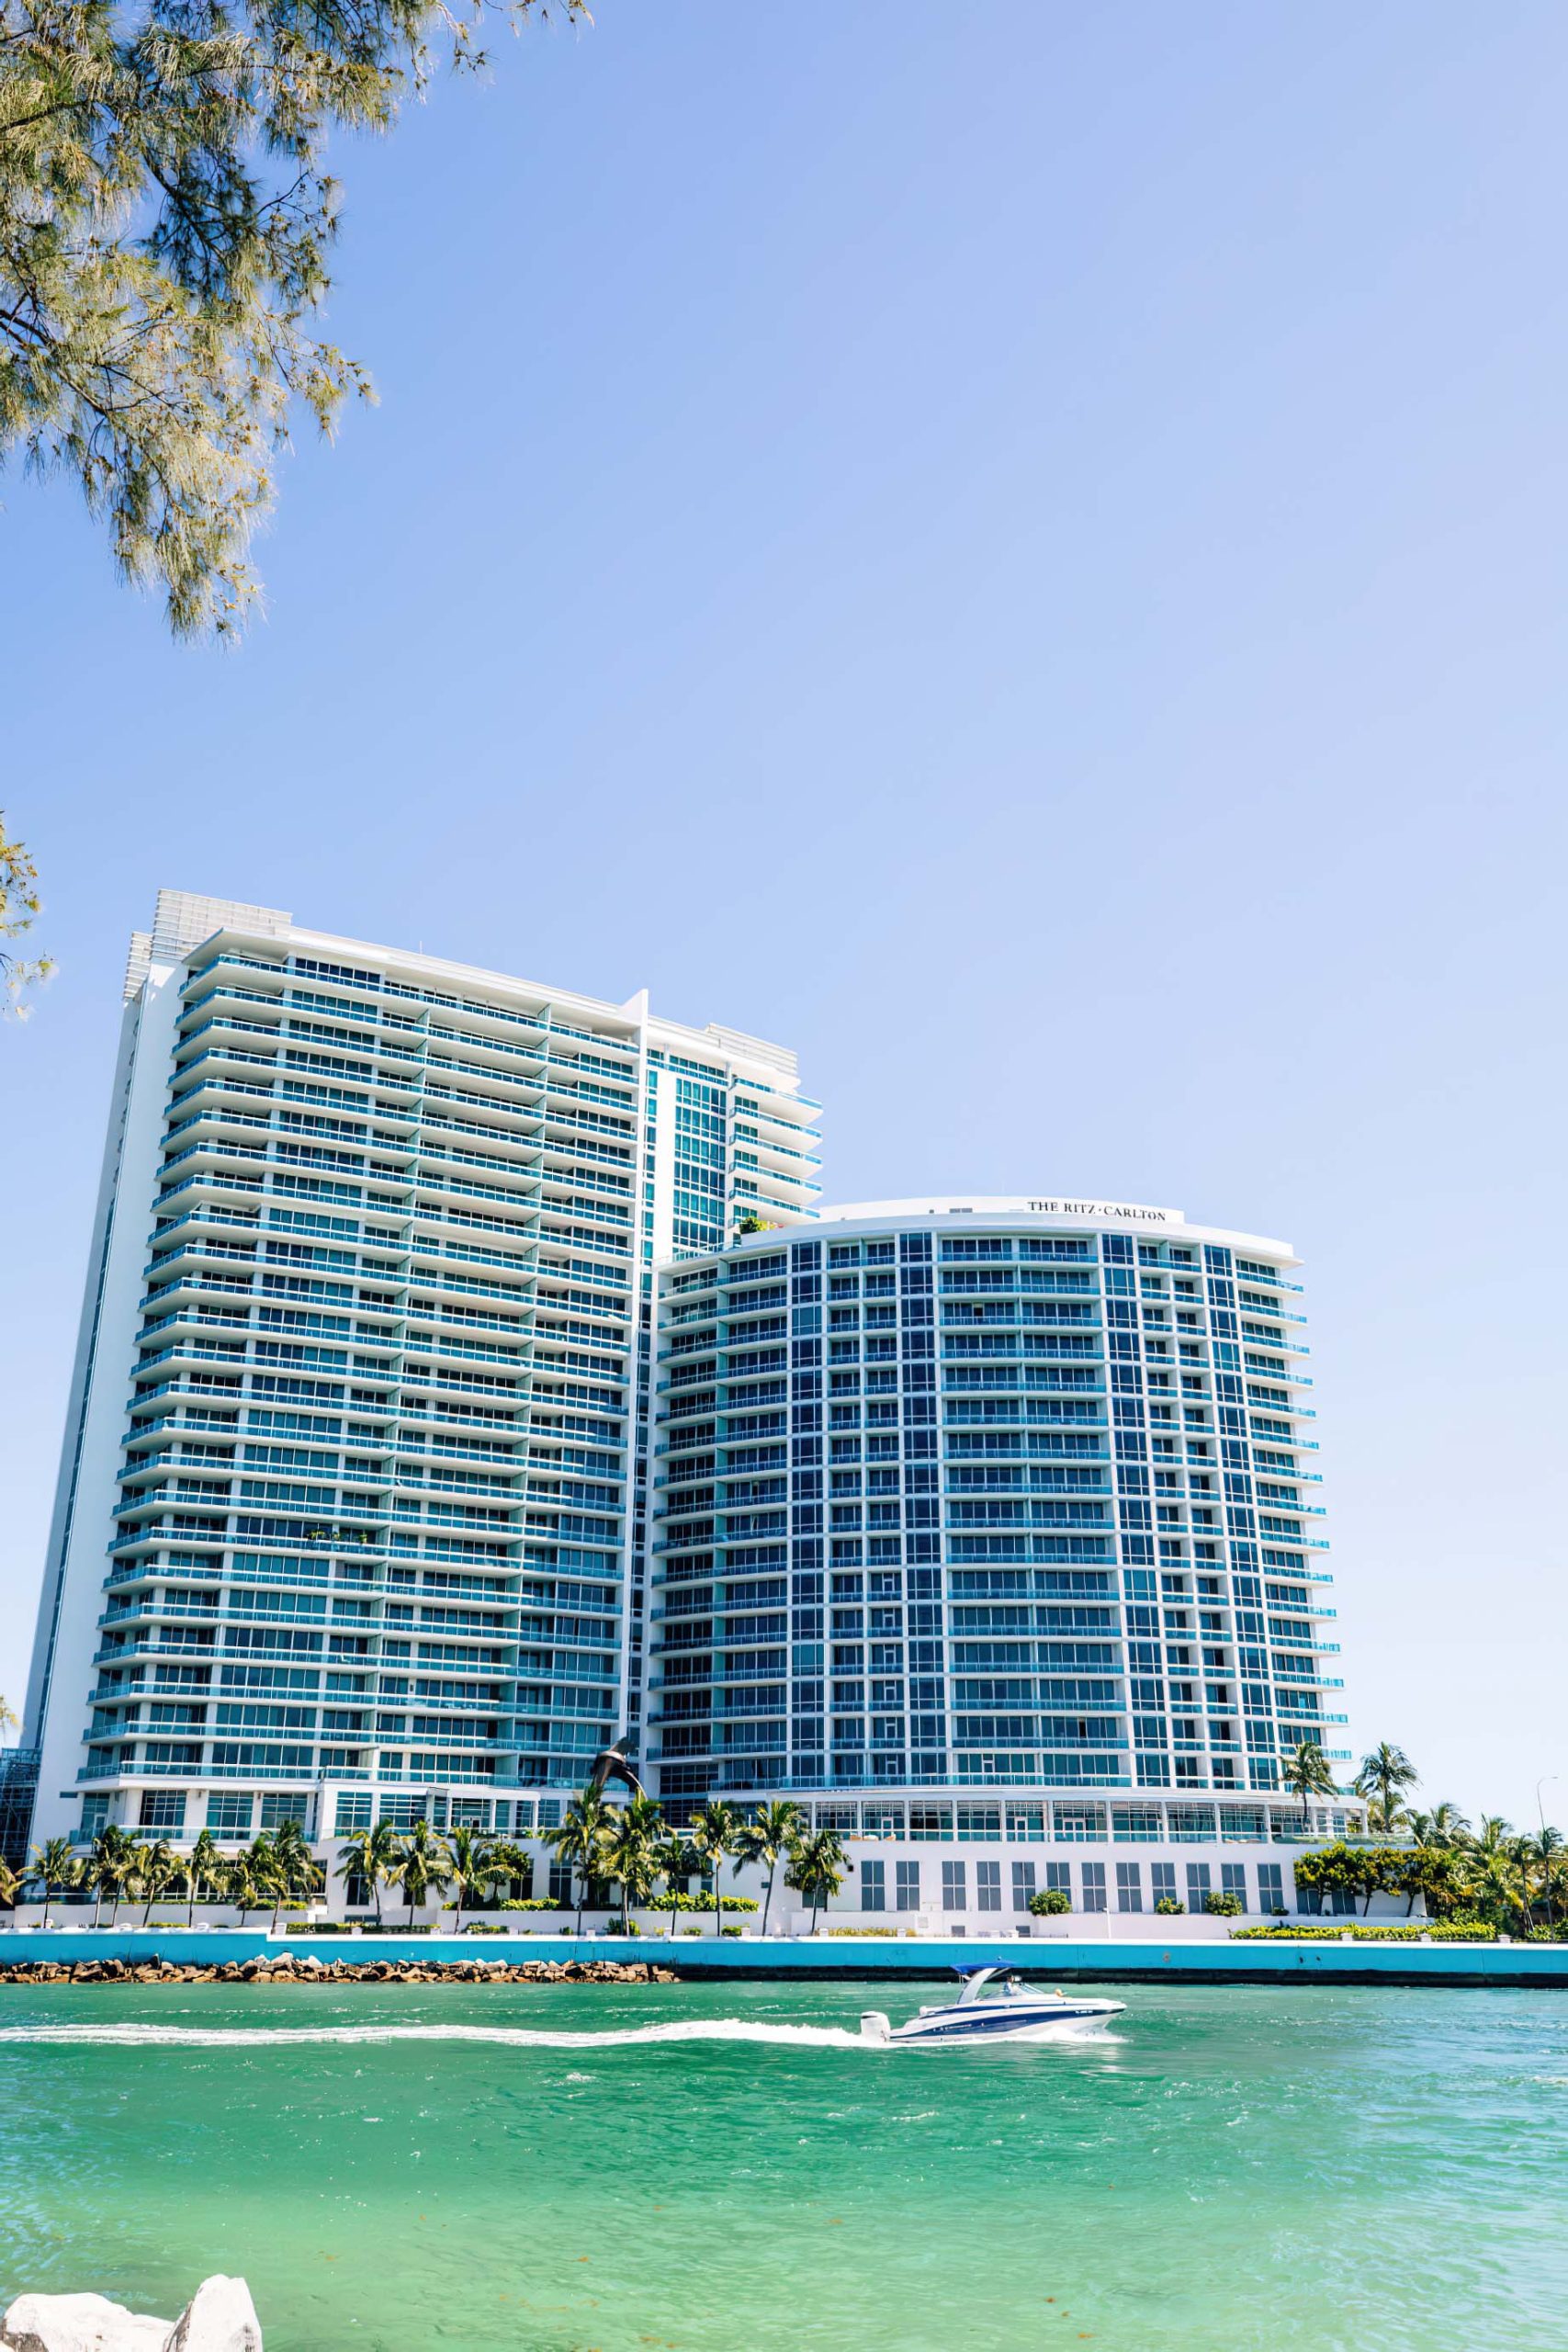 The Ritz-Carlton Bal Harbour, Miami Resort - Bal Harbour, FL, USA - Resort Tower Water View